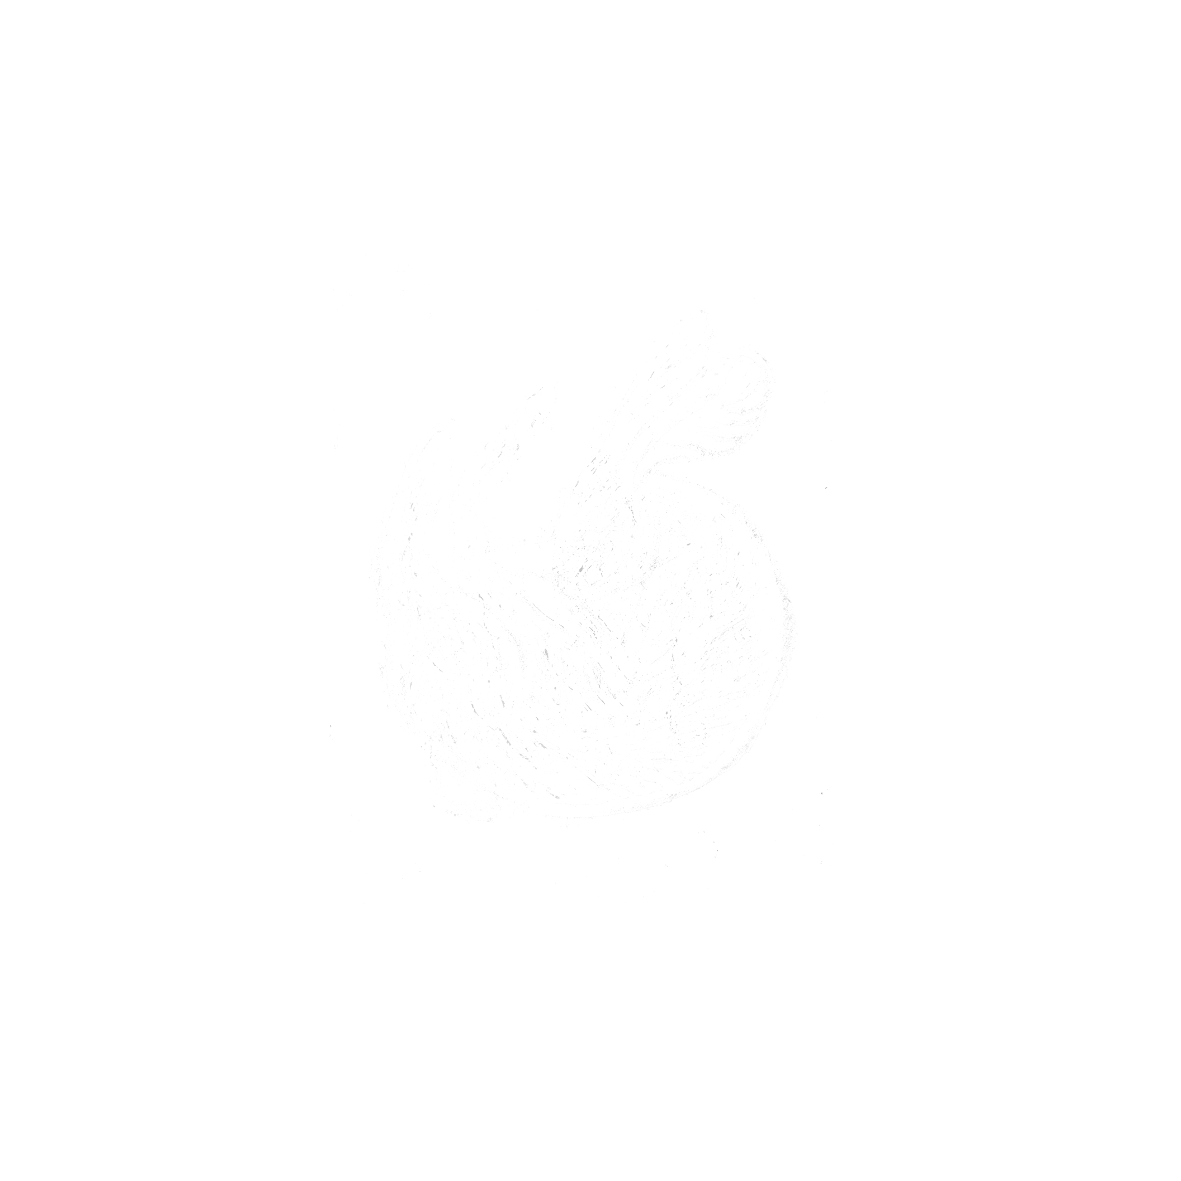 The Groggy Rabbit